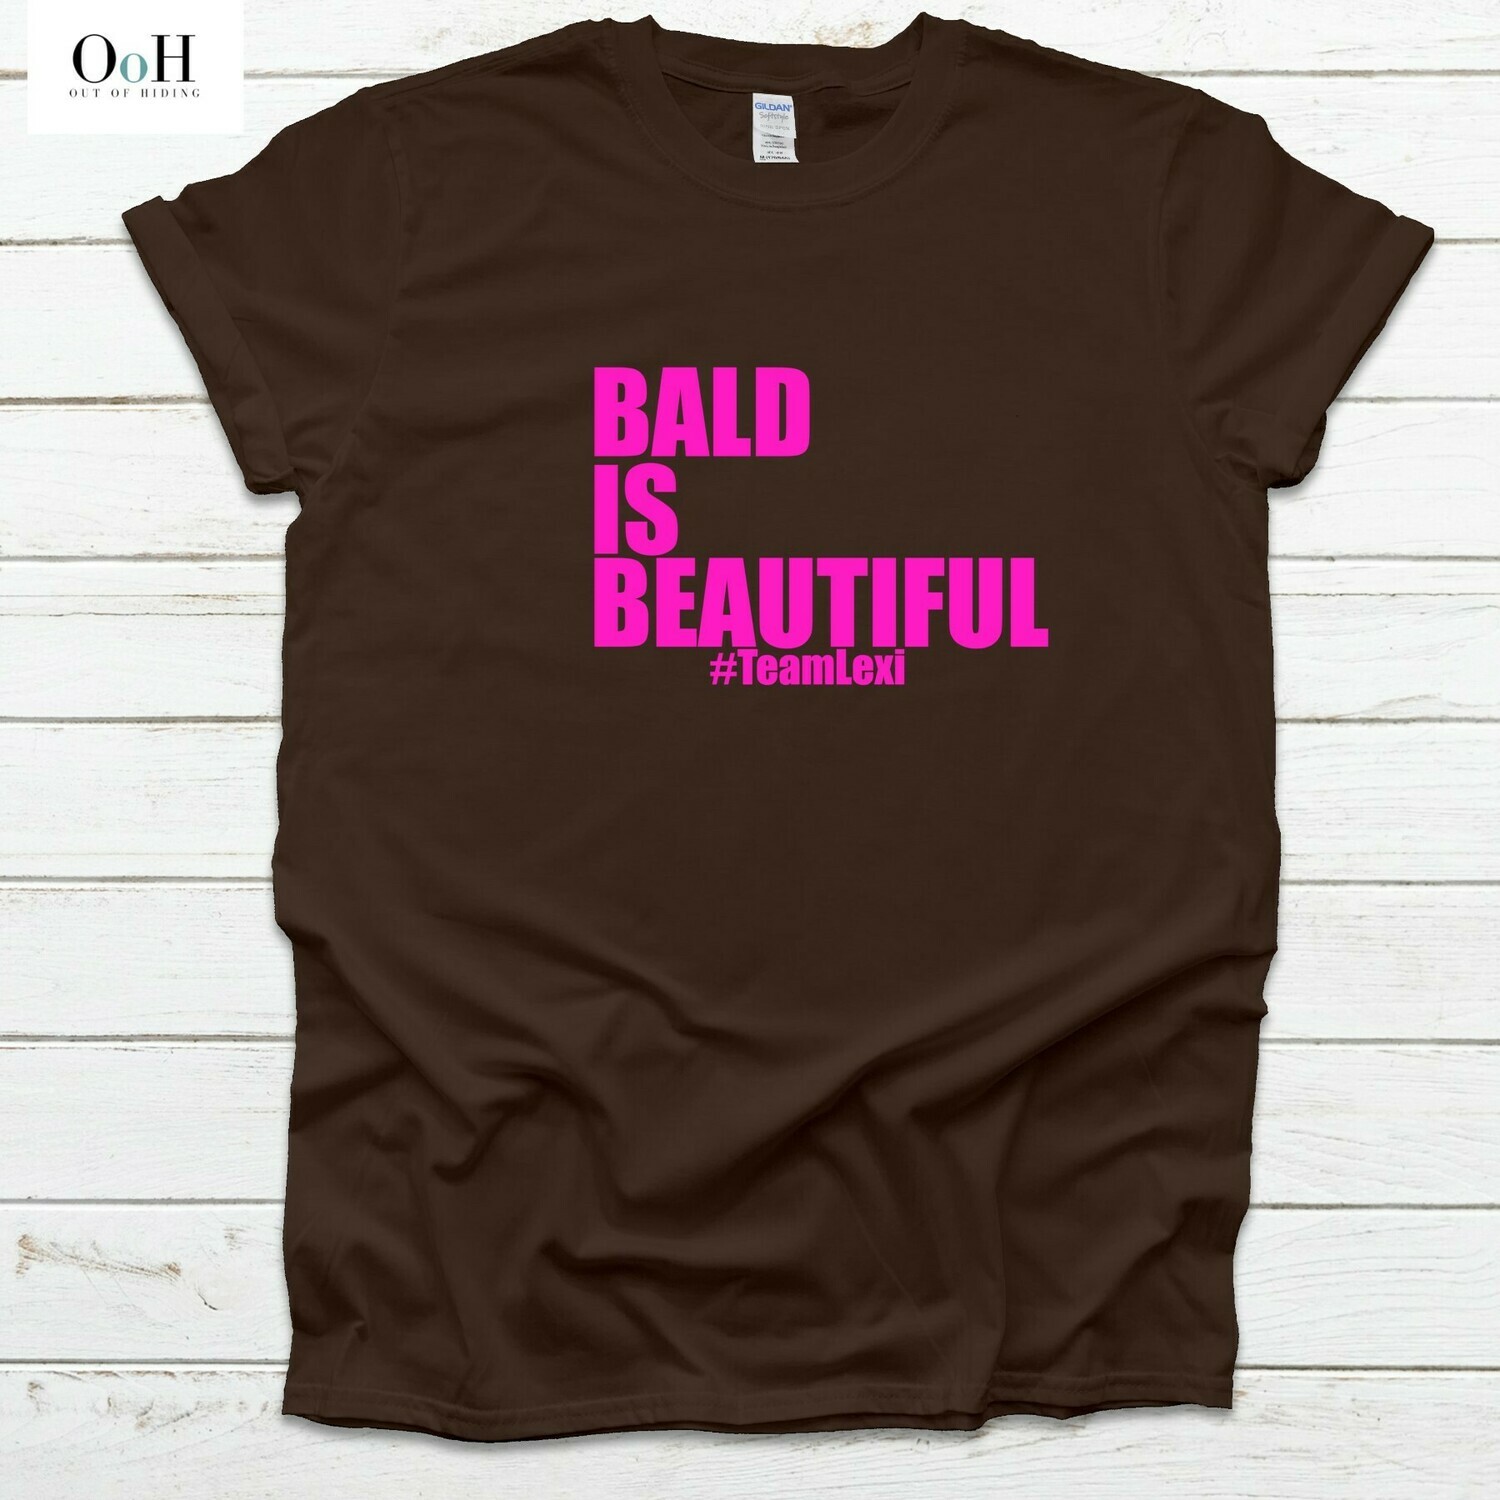 Bald is BEAUTIFUL - #TeamLexi